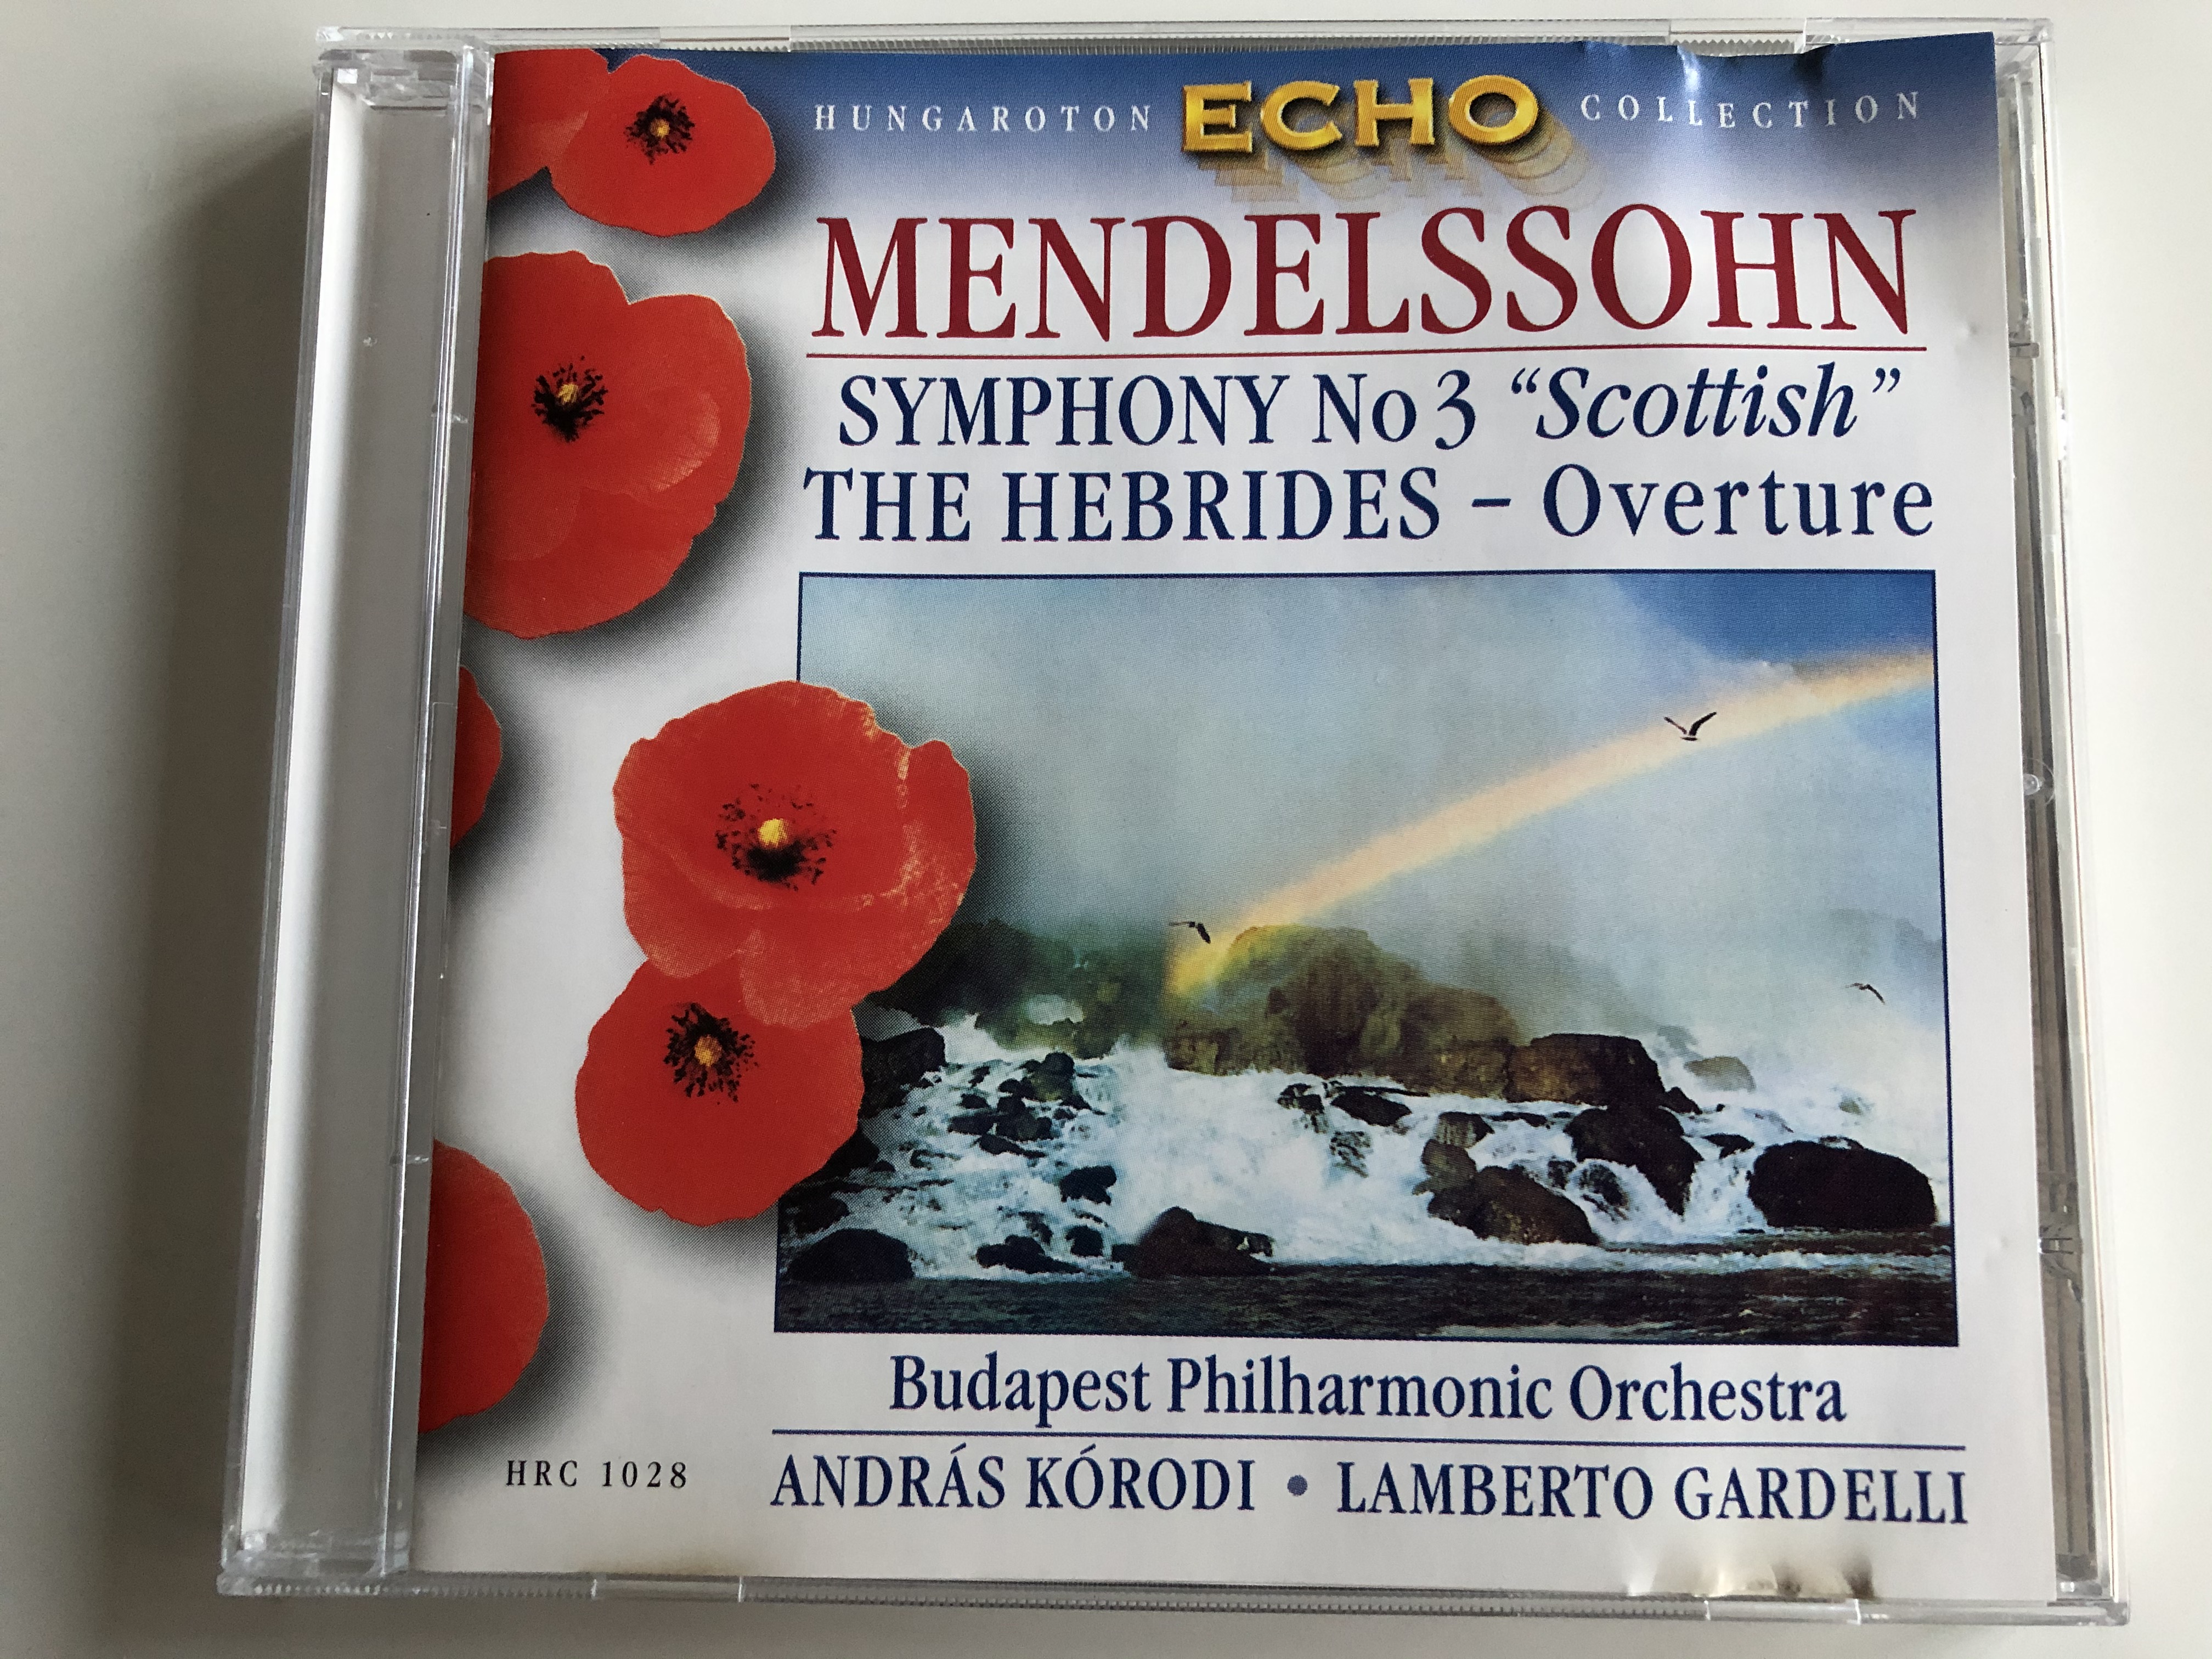 mendelssohn-symphony-no.-3-scottish-the-hebrides-overture-budapest-philharmonic-orchestra-andr-s-k-rodi-lamberto-gardelli-hungaroton-classic-audio-cd-1999-stereo-hrc-1028-1-.jpg